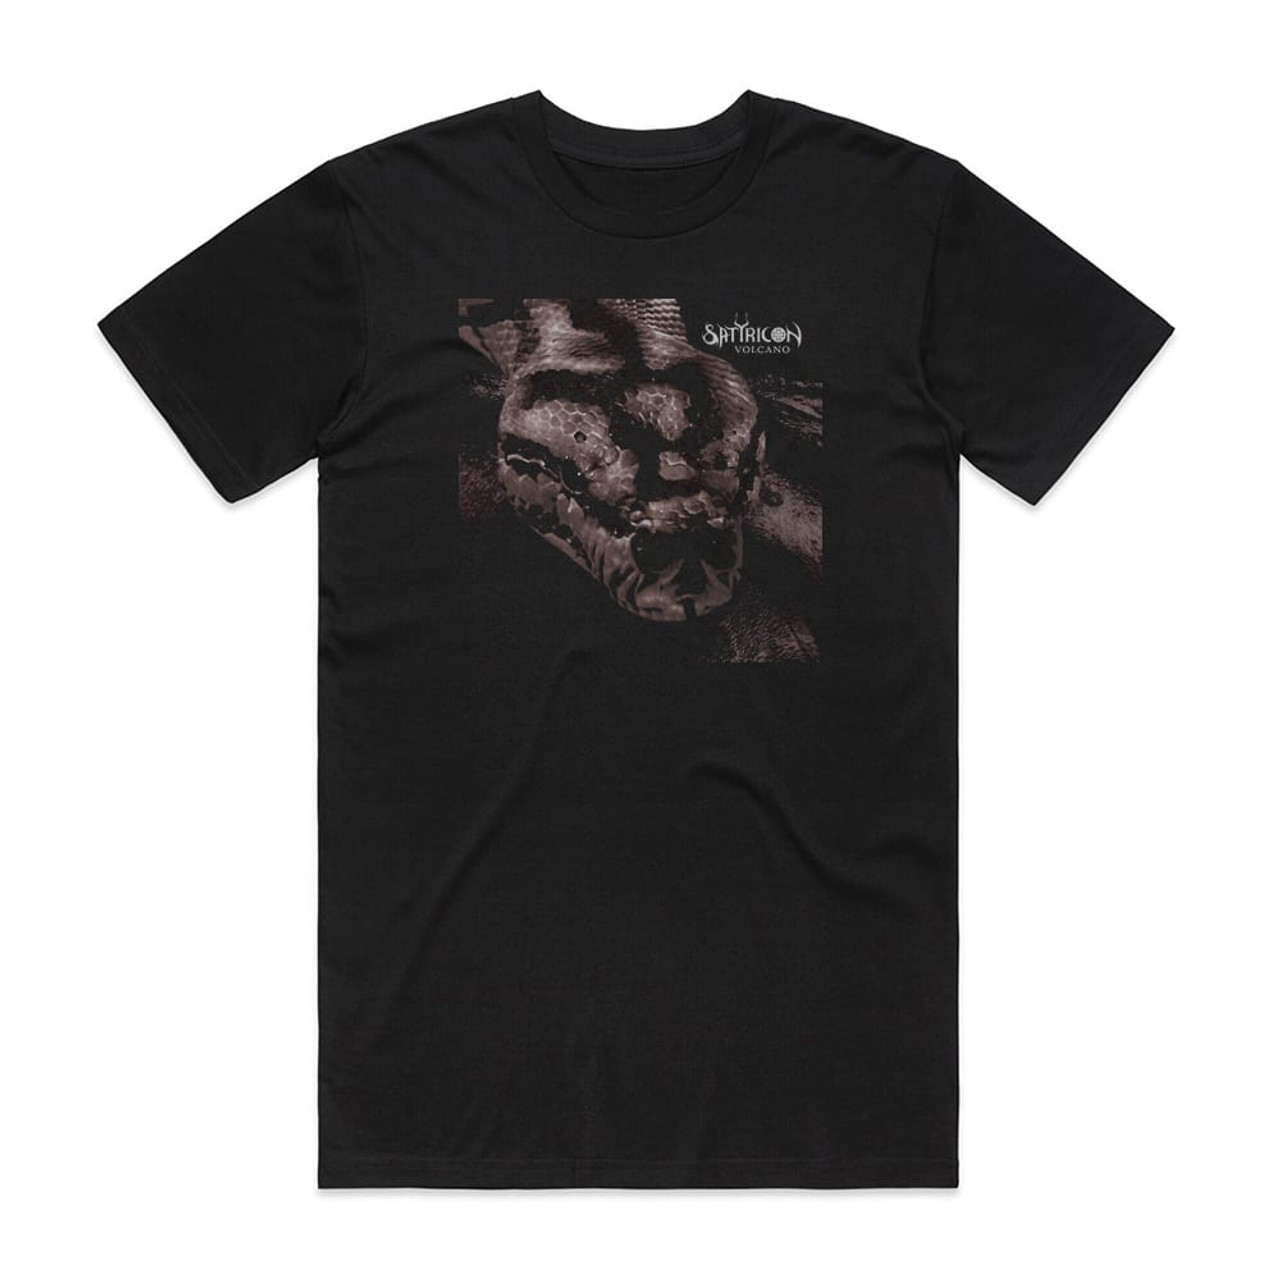 Satyricon Volcano Album Cover T-Shirt Black